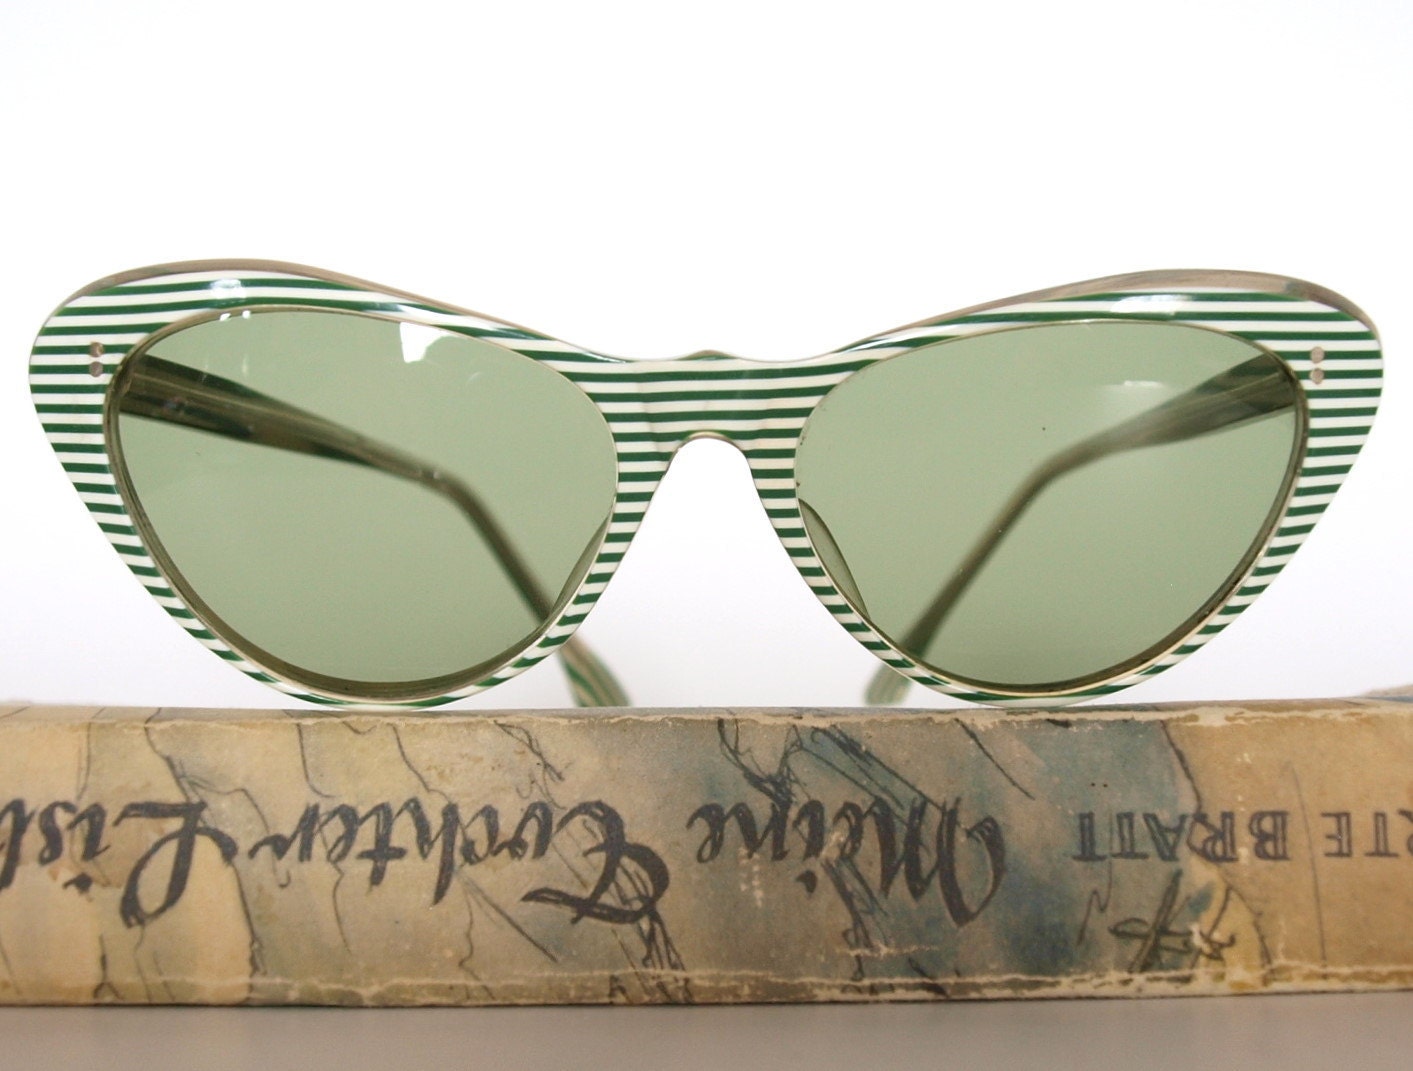 Cool 1950s Cat Eye Vintage Sunglasses from Germany - Green White Stripes - FrauleinMarlene